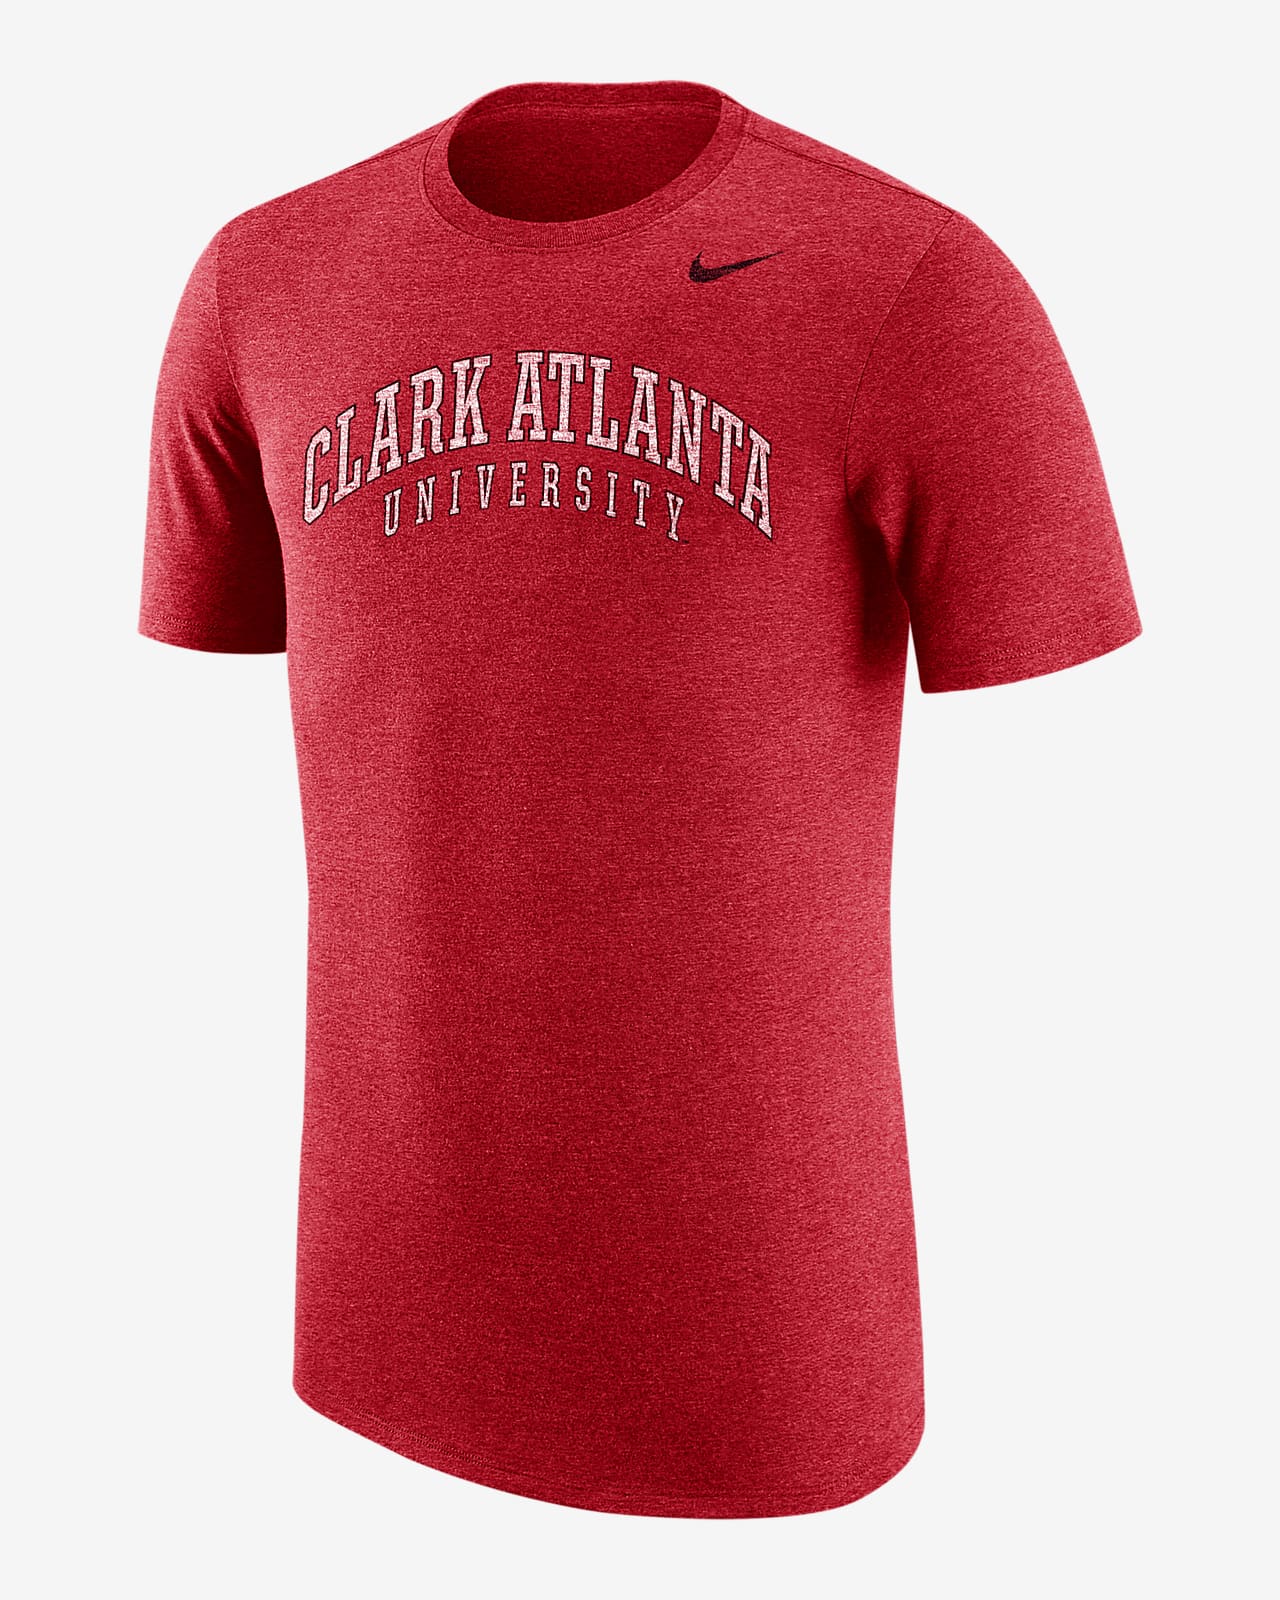 Nike College (Clark Atlanta) Men's T-Shirt